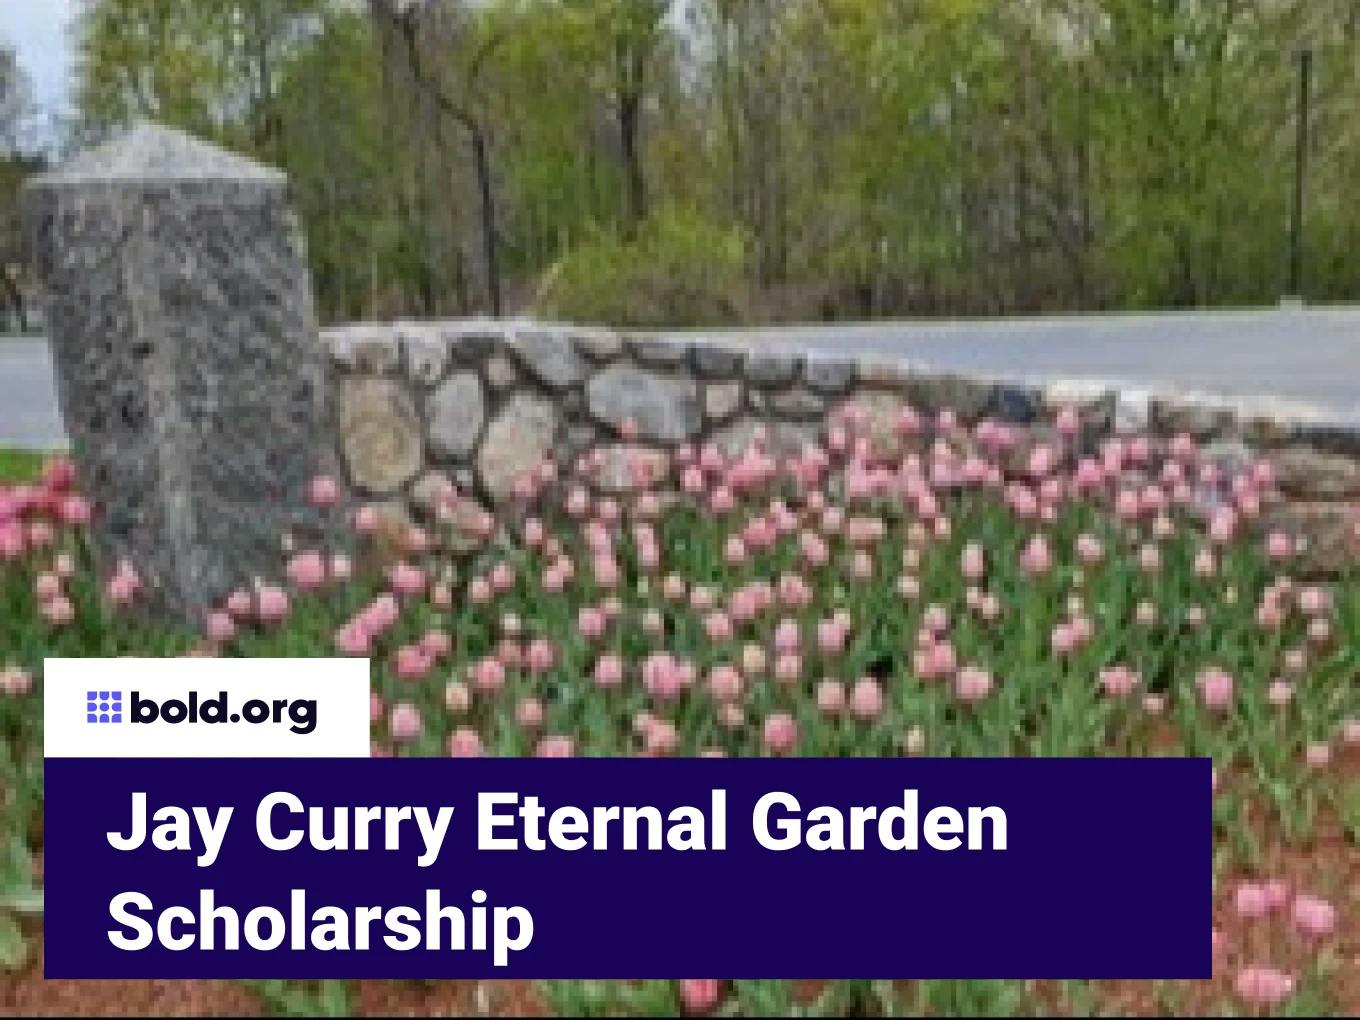 Jay Curry Eternal Garden Scholarship